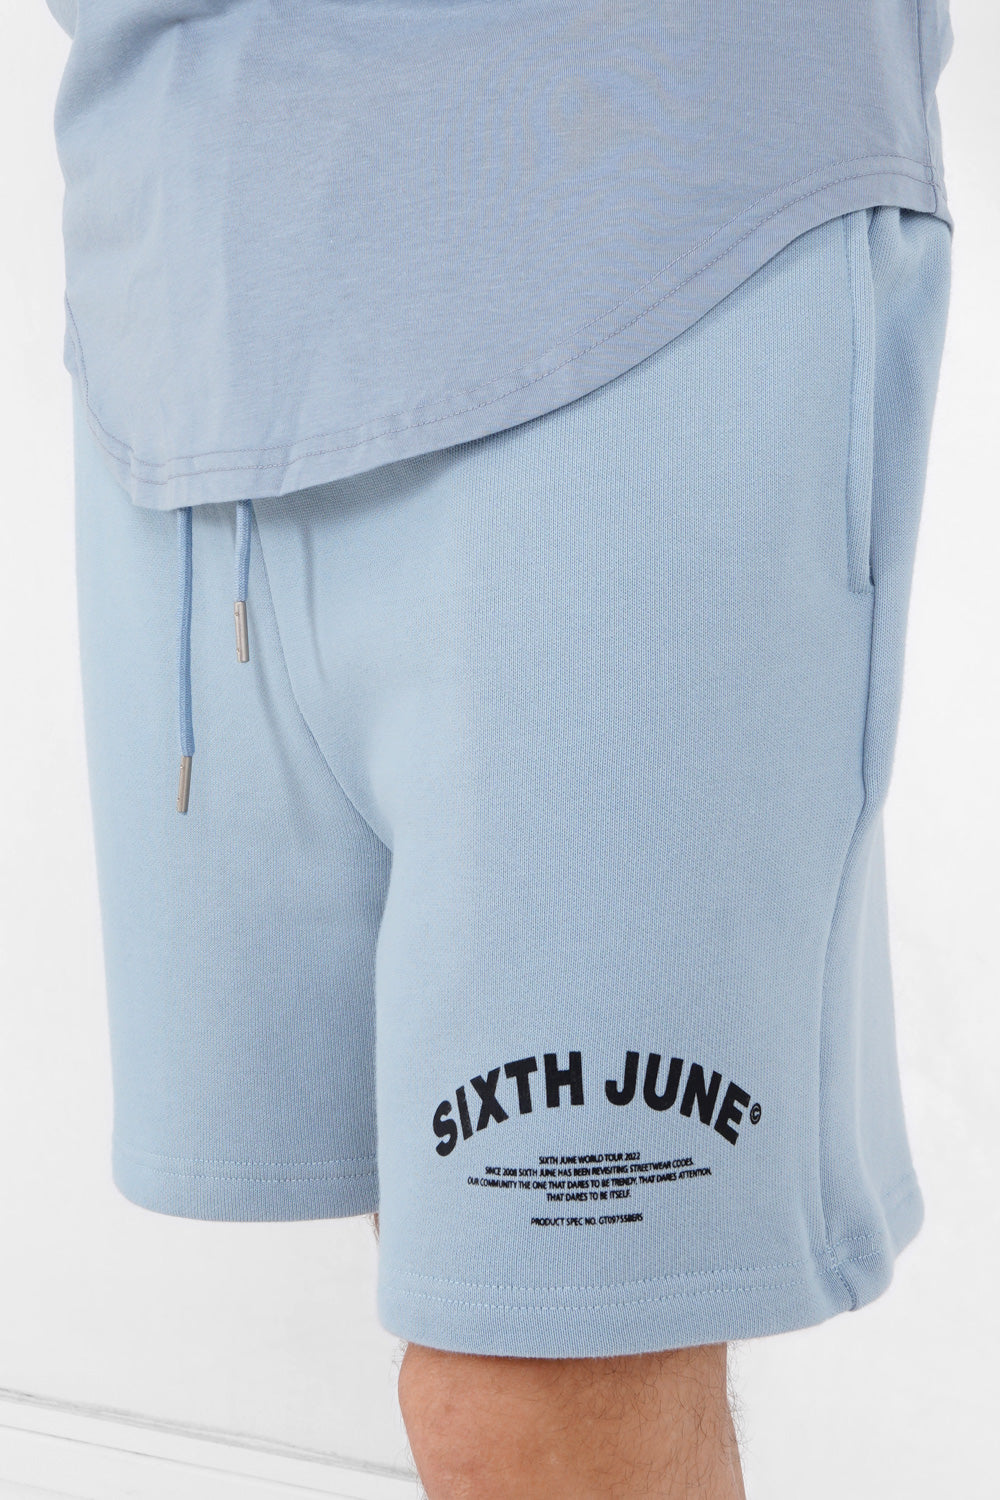 Sixth June - Short logo incurvé Bleu clair